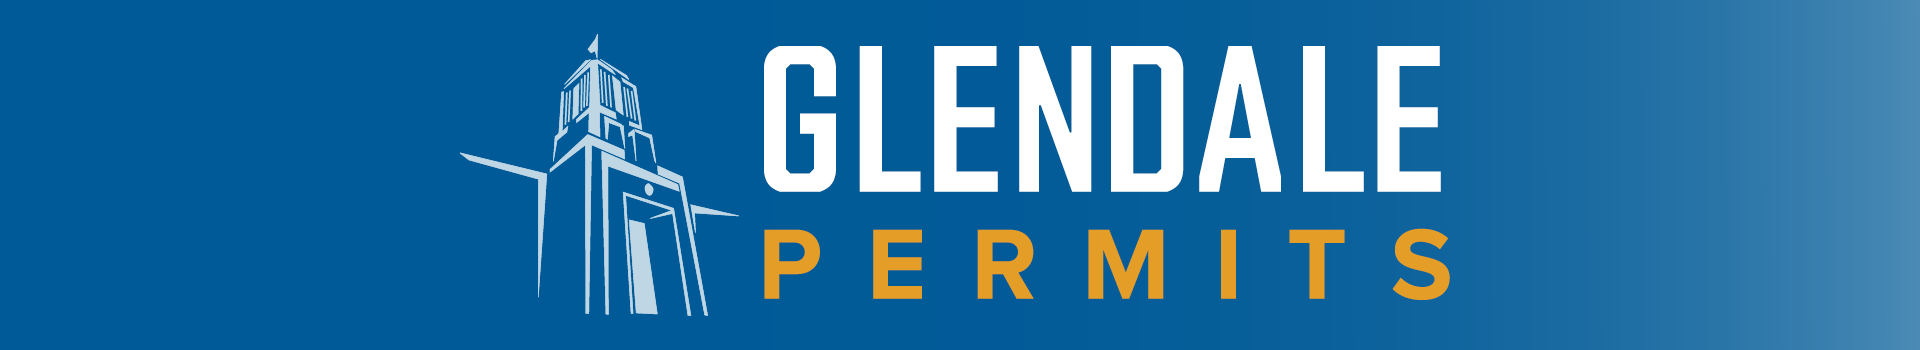 GlendalePermits_websitebanner